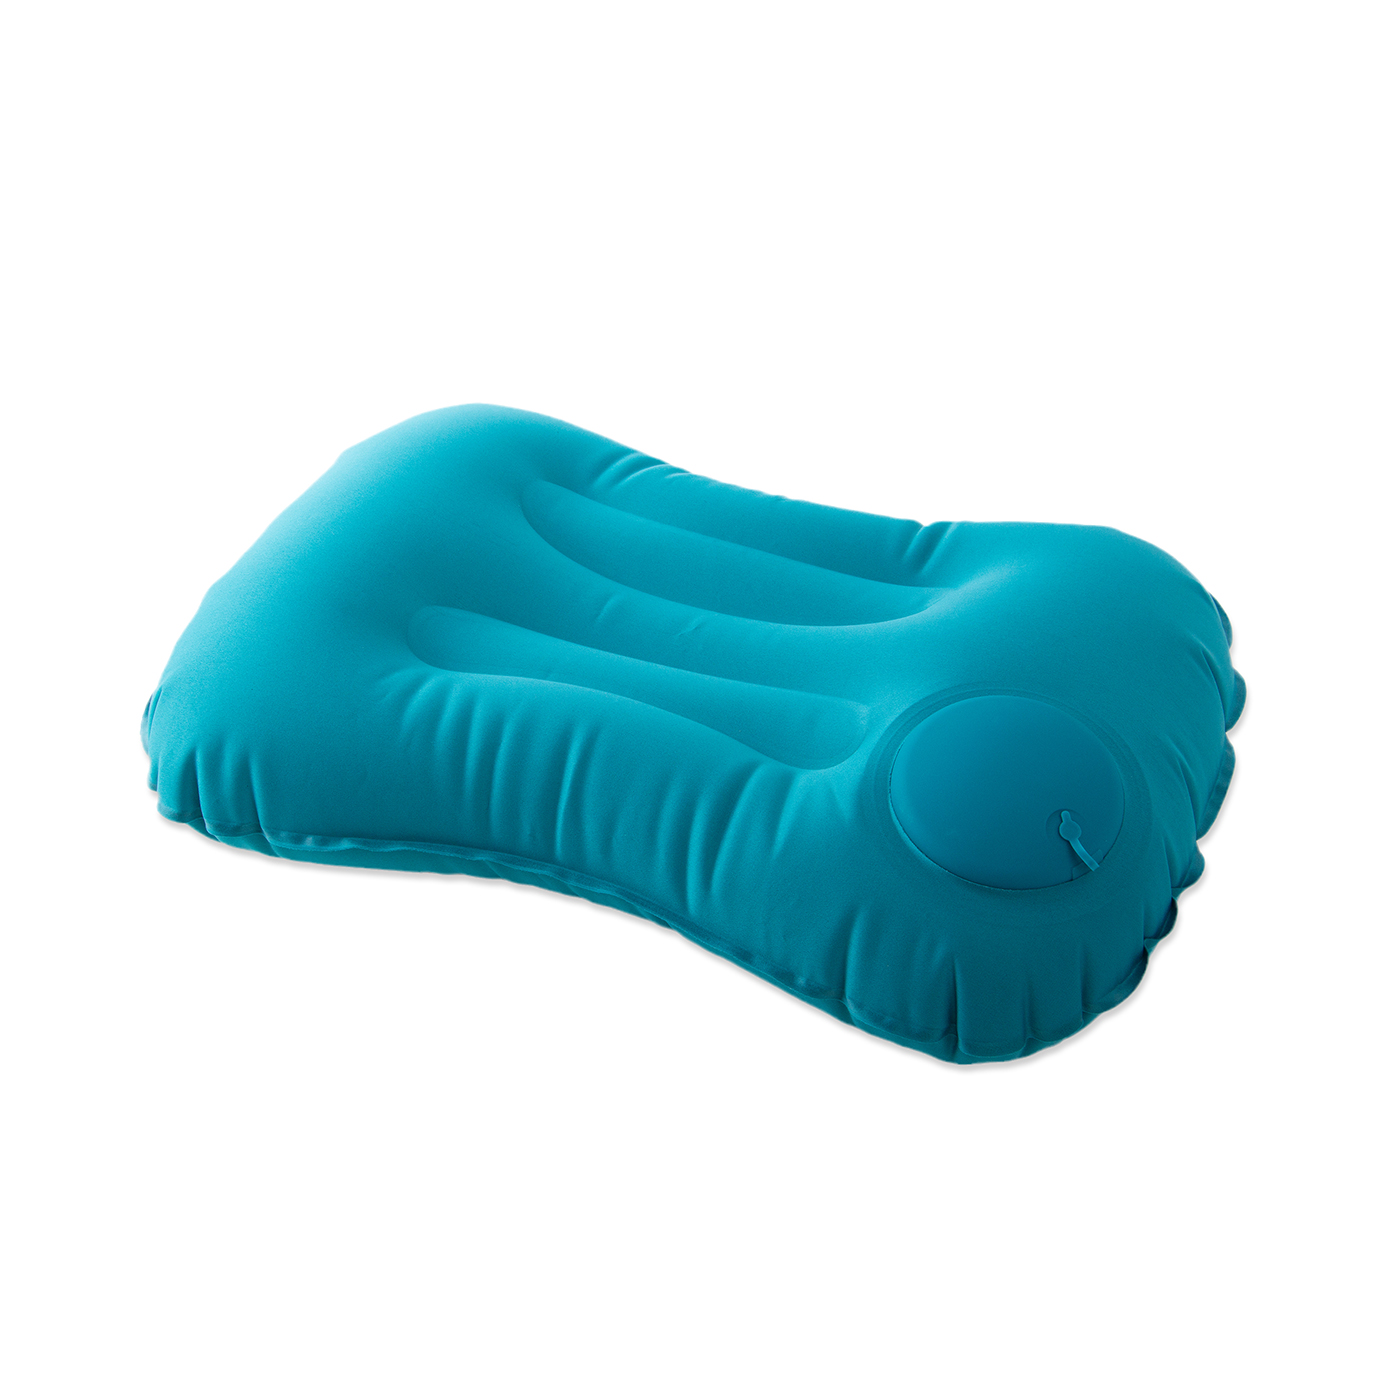 Portable Inflatable TPU Travel Pillow2